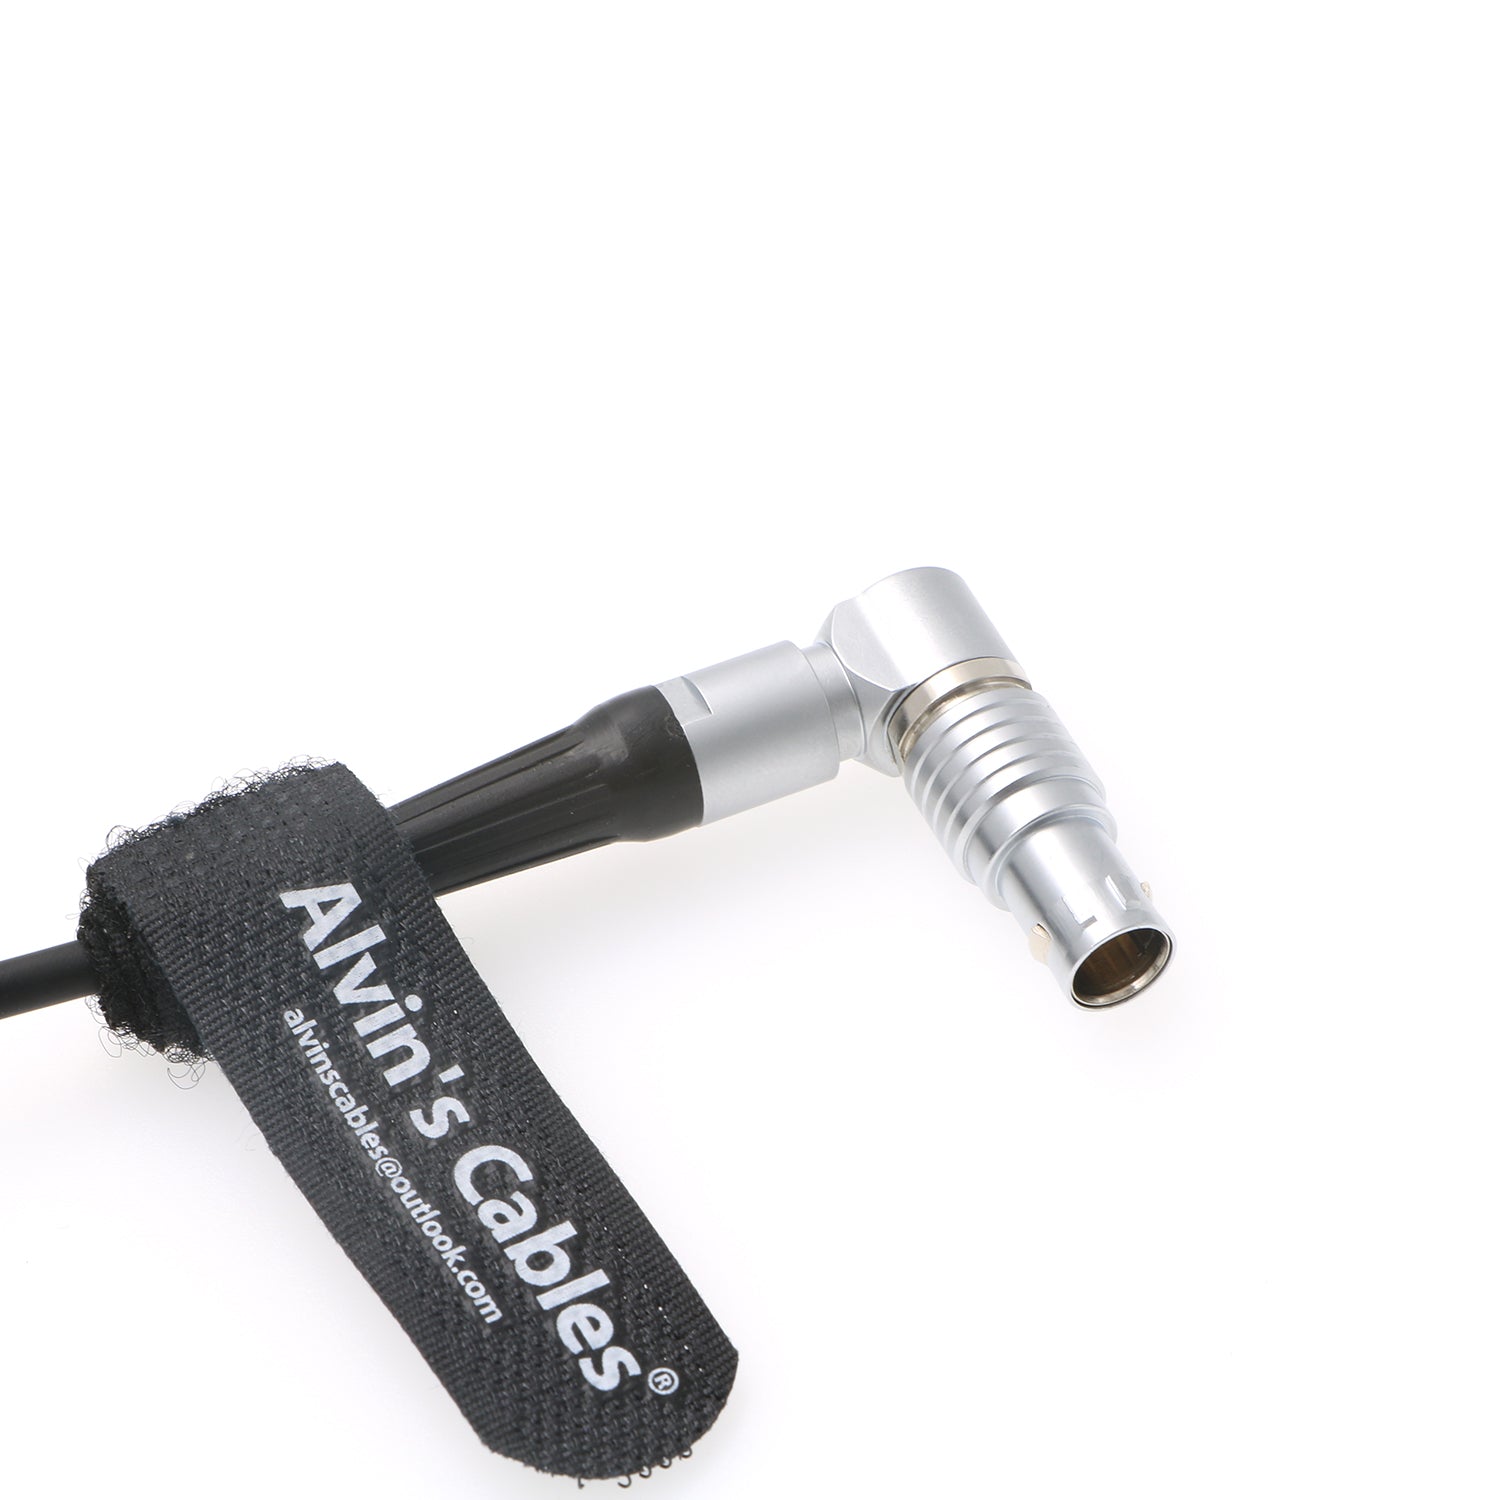 Alvin’s Cables Stromkabel für DJI-Ronin-RS2 zu DJI-Wireless-Follow-Focus Drehbarer rechtwinkliger 6-Pin auf 6-Pin